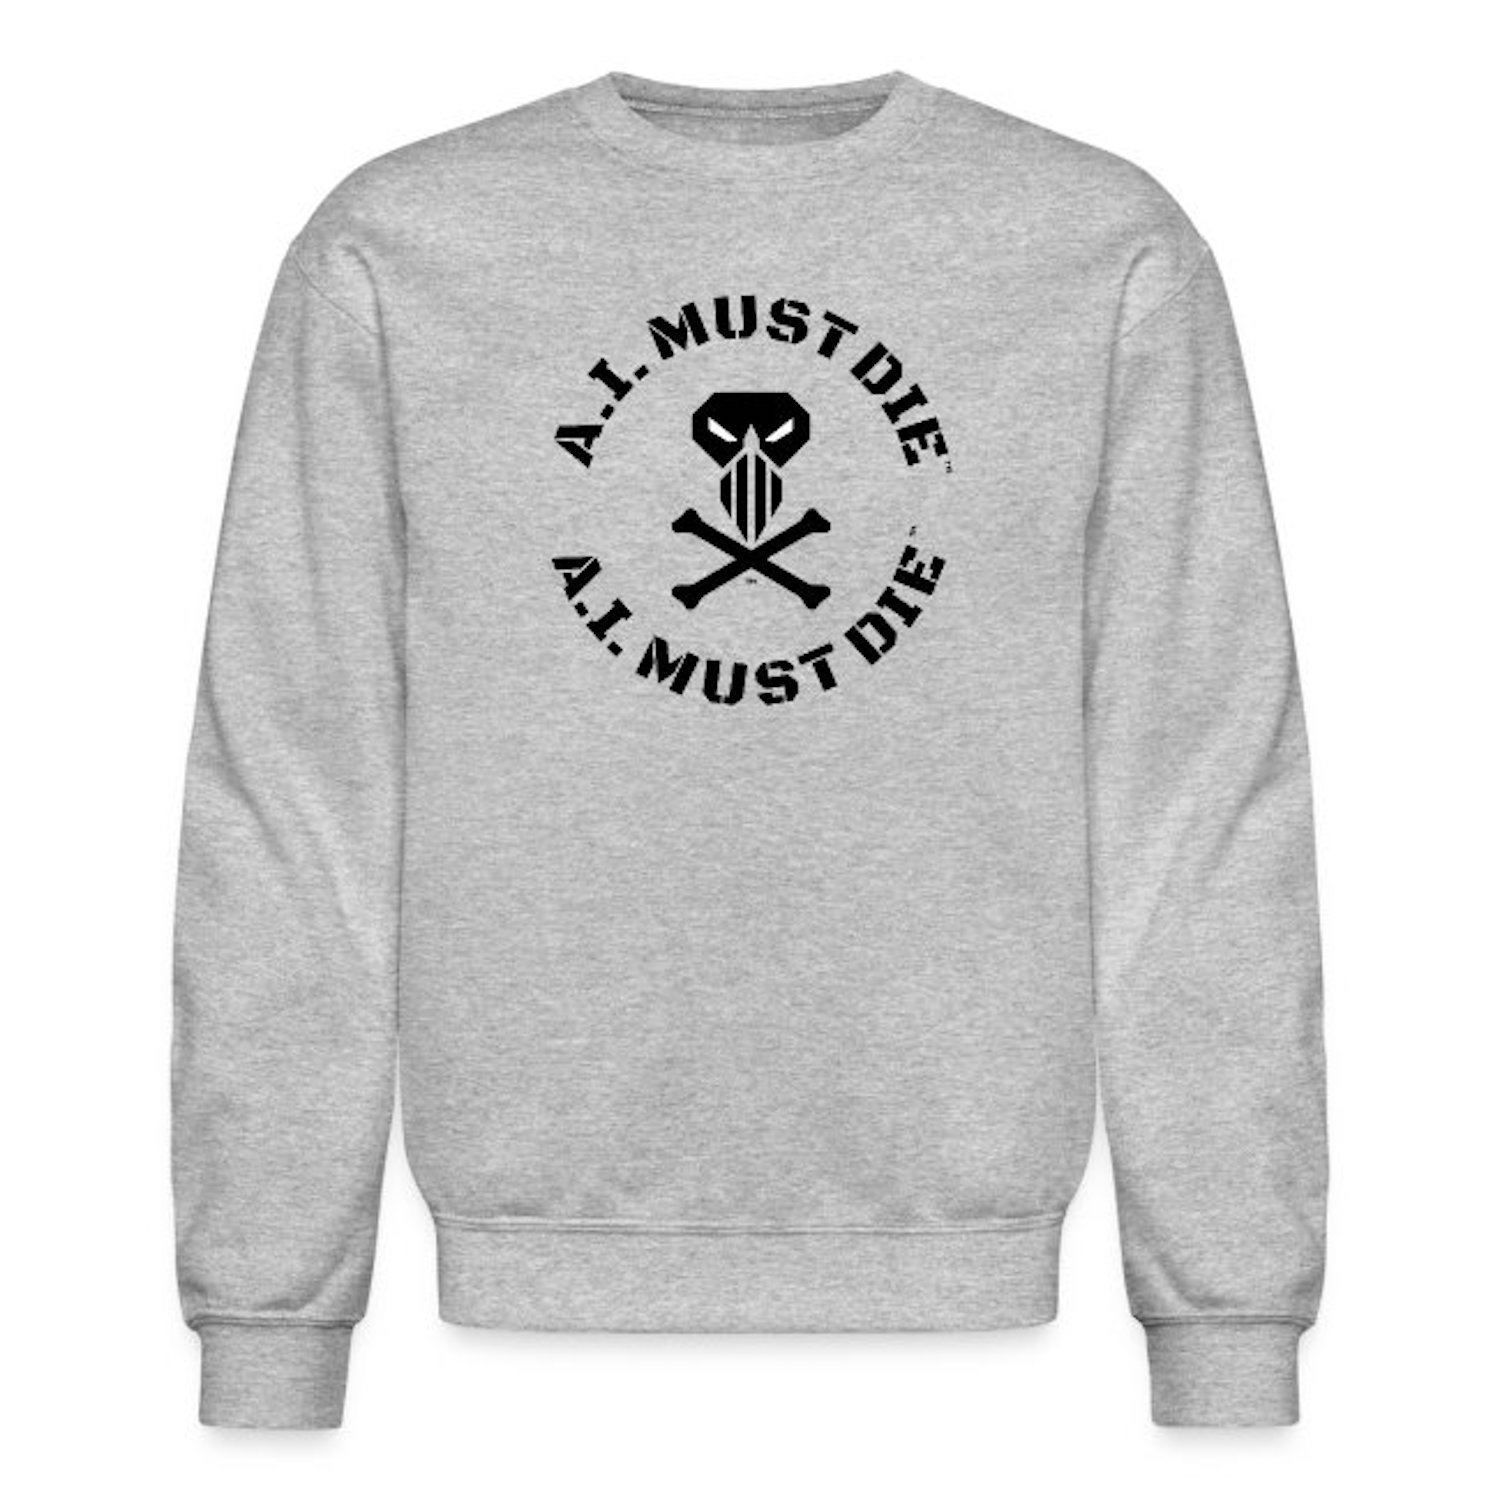 A.I. MUST DIE™ - Circle Logo (Black Military Font) Unisex Crewneck Sweatshirt US Store.